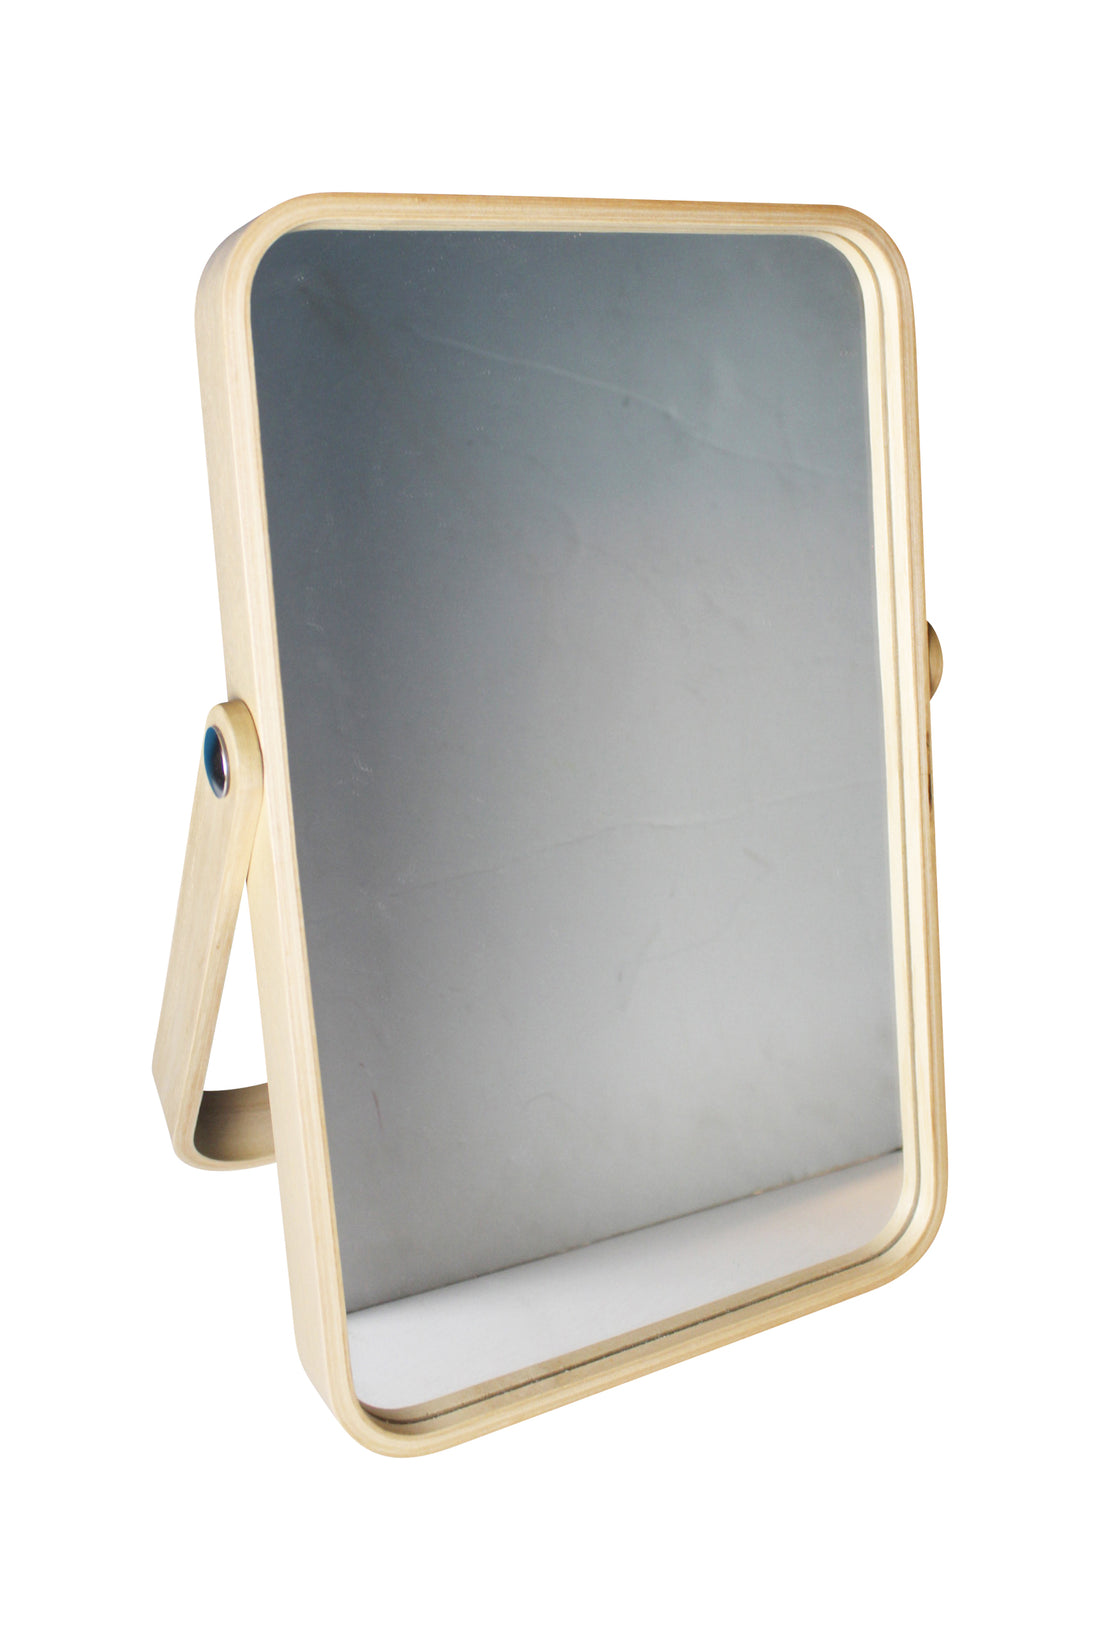 Modern Standing Tabletop Mirror